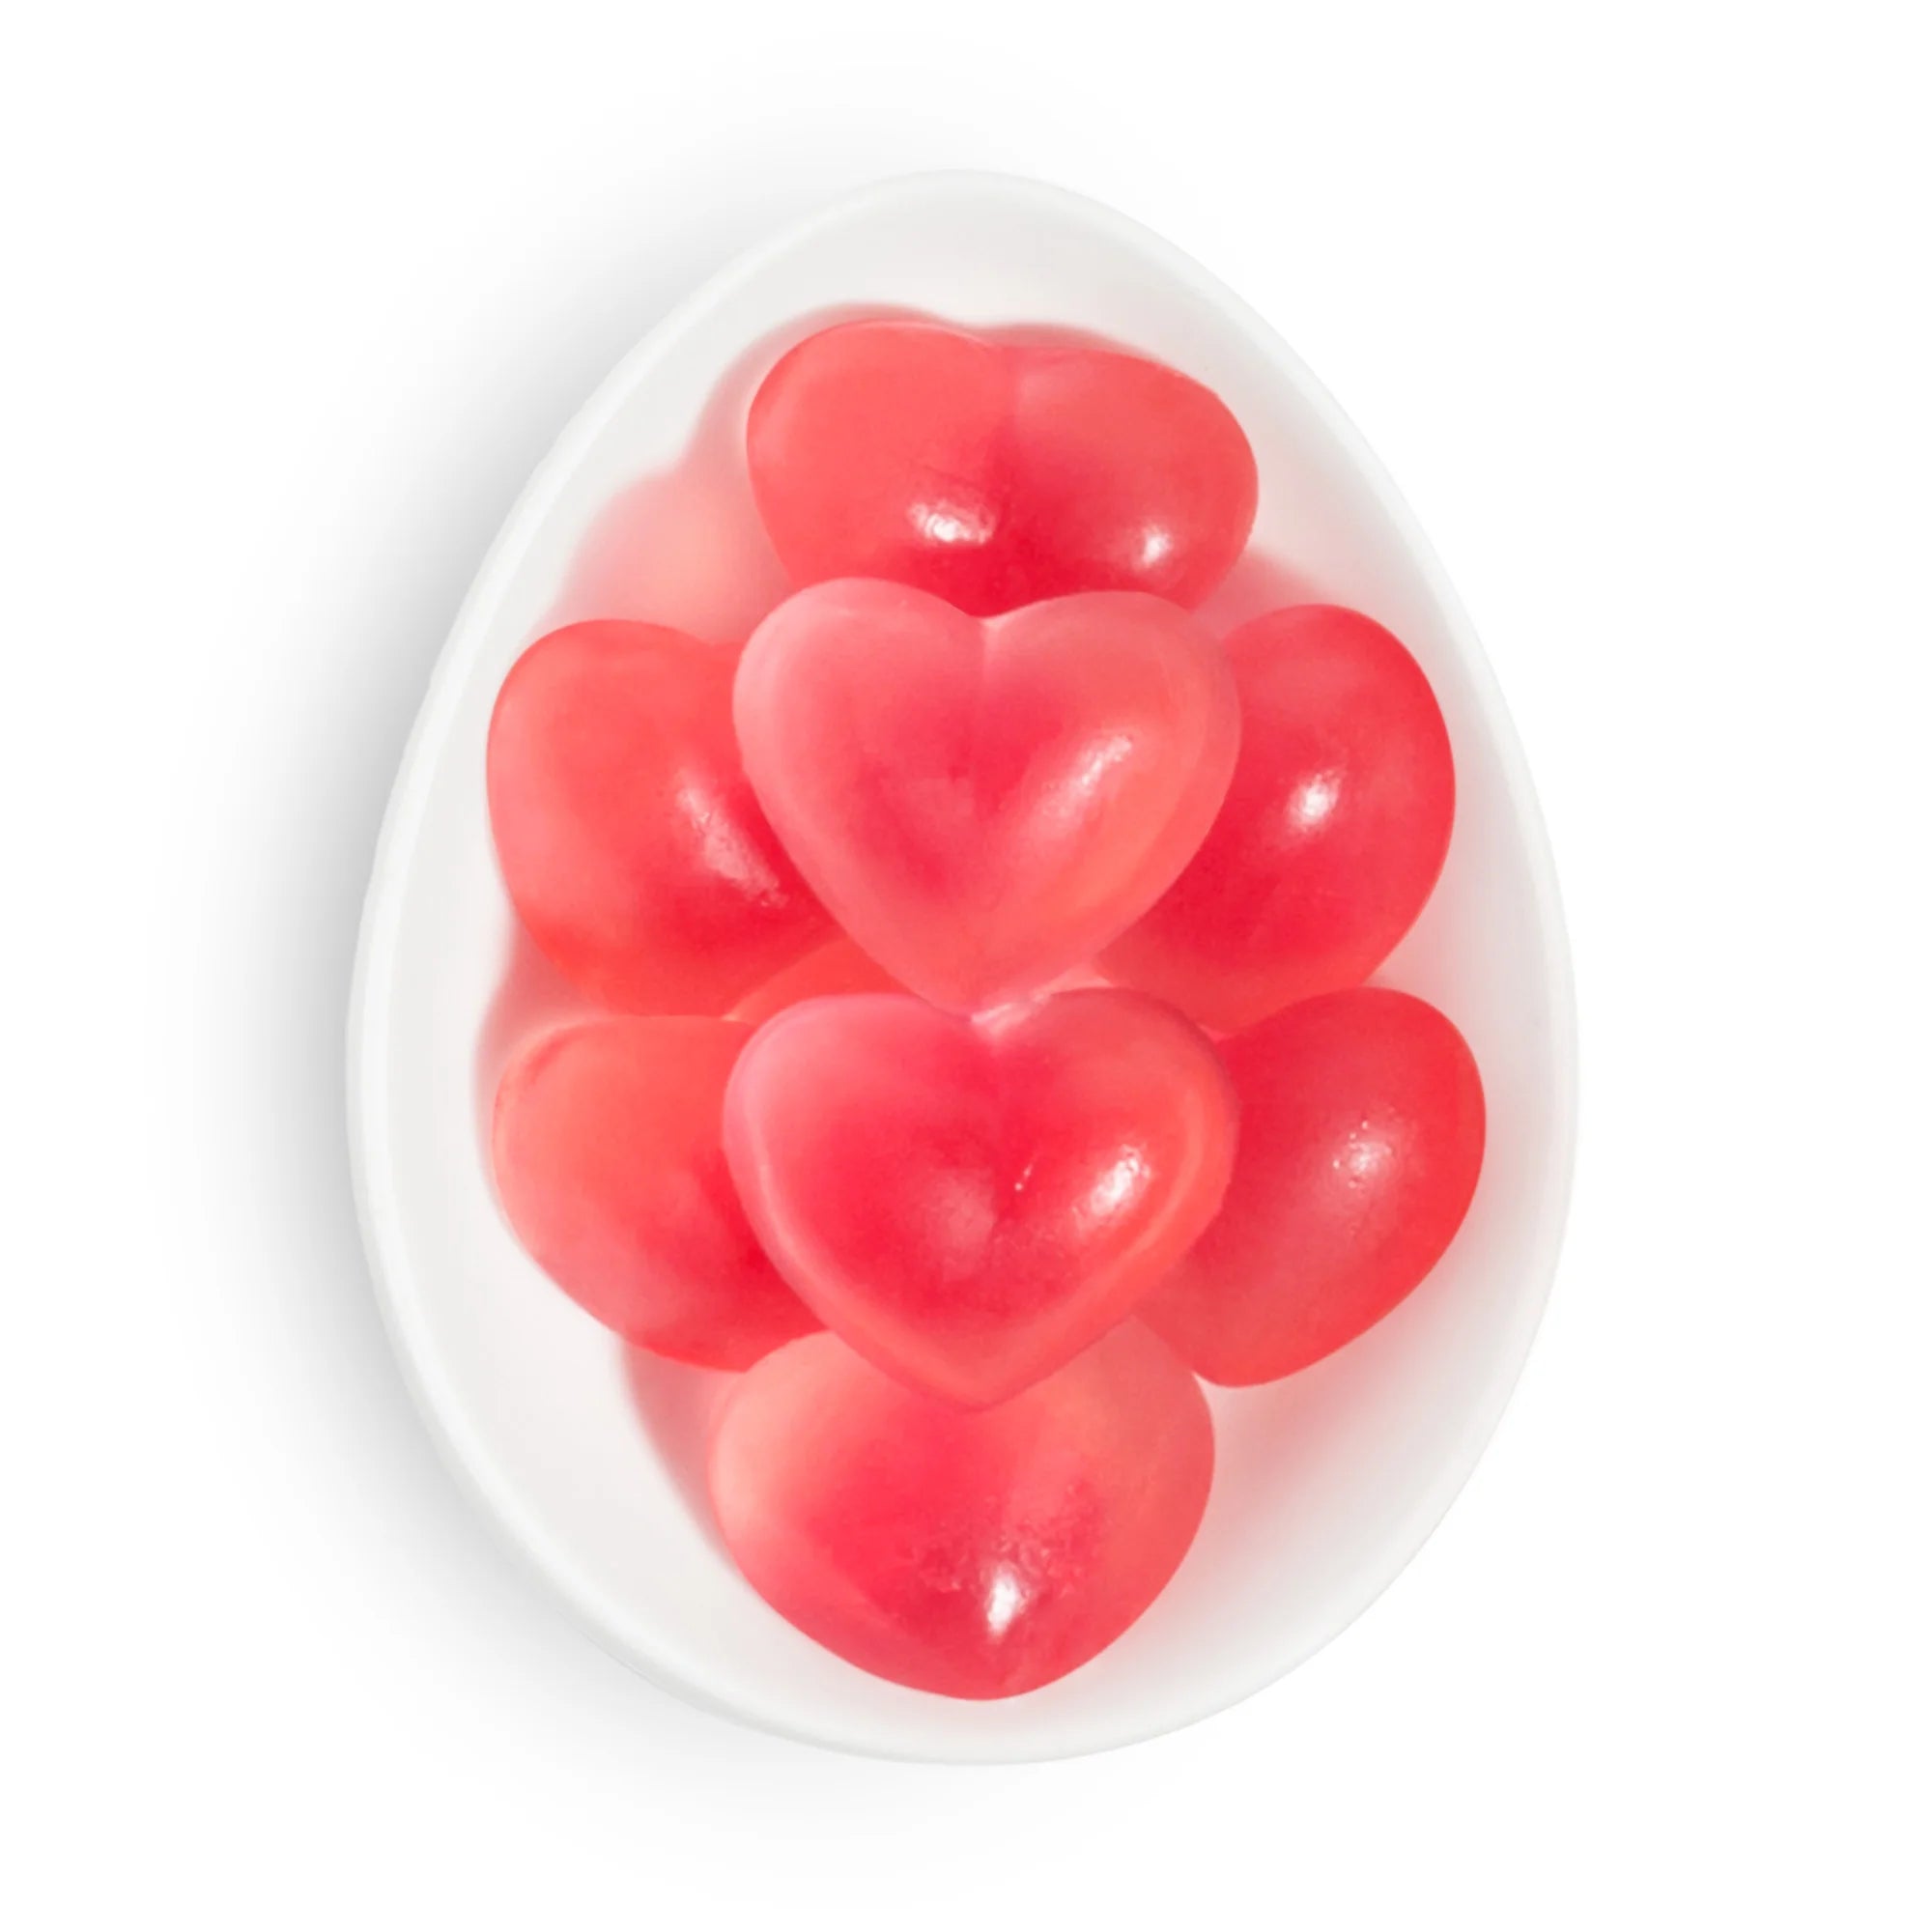 The XOXO Strawberry Hearts by Sugarfina